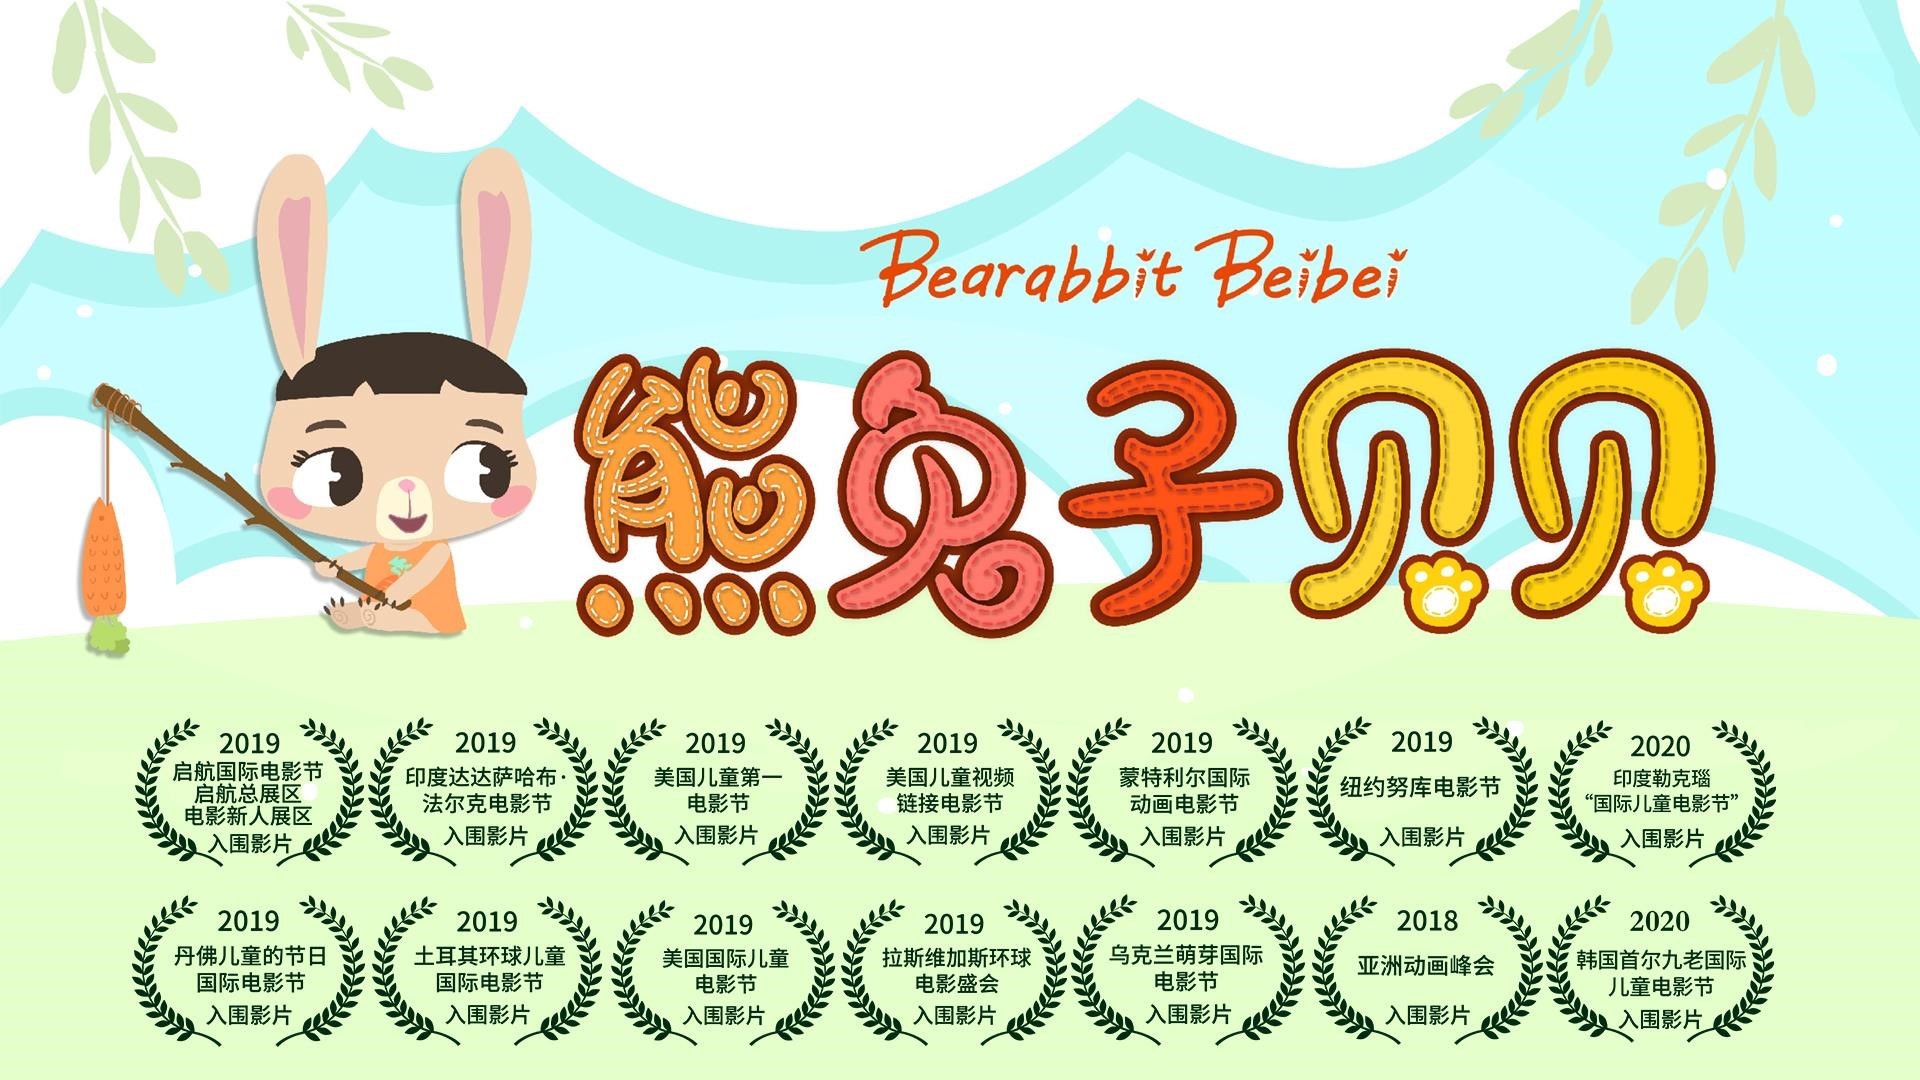 The Moyu Animation Company墨羽动画旗下动画片熊兔子贝贝 Bearabbit Beibei系列人物之贝贝徽章